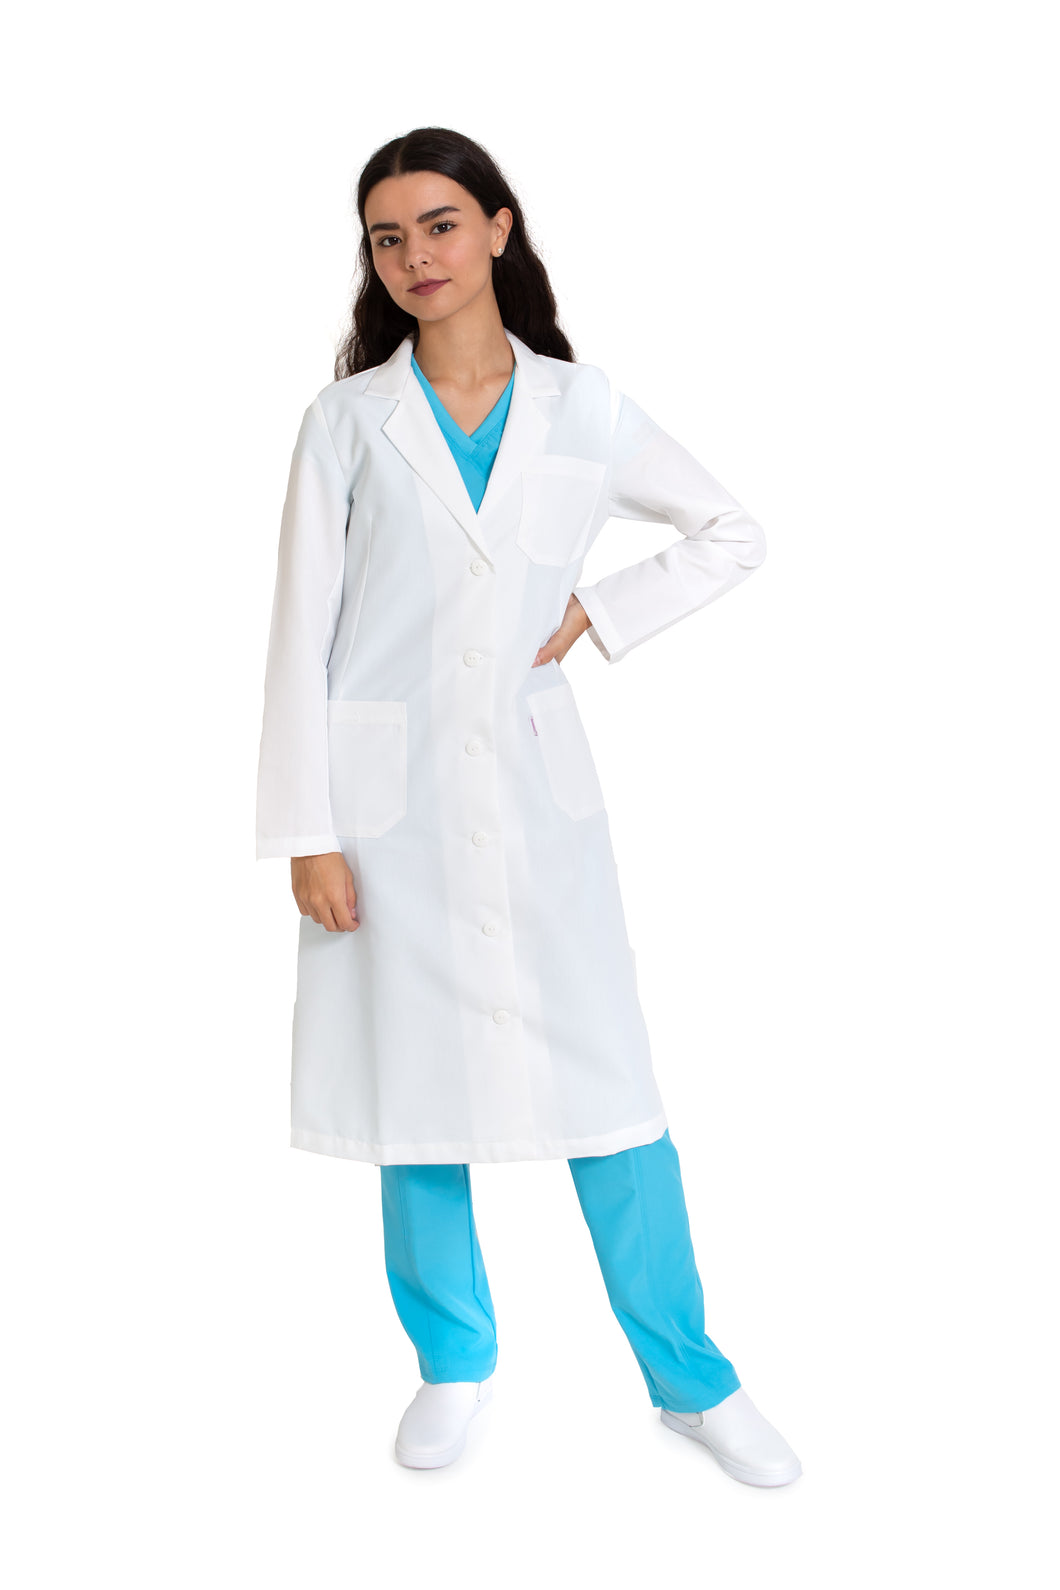 Bata Médica de Dama KA-35-Clásica Bata-Karen Medical Fashion